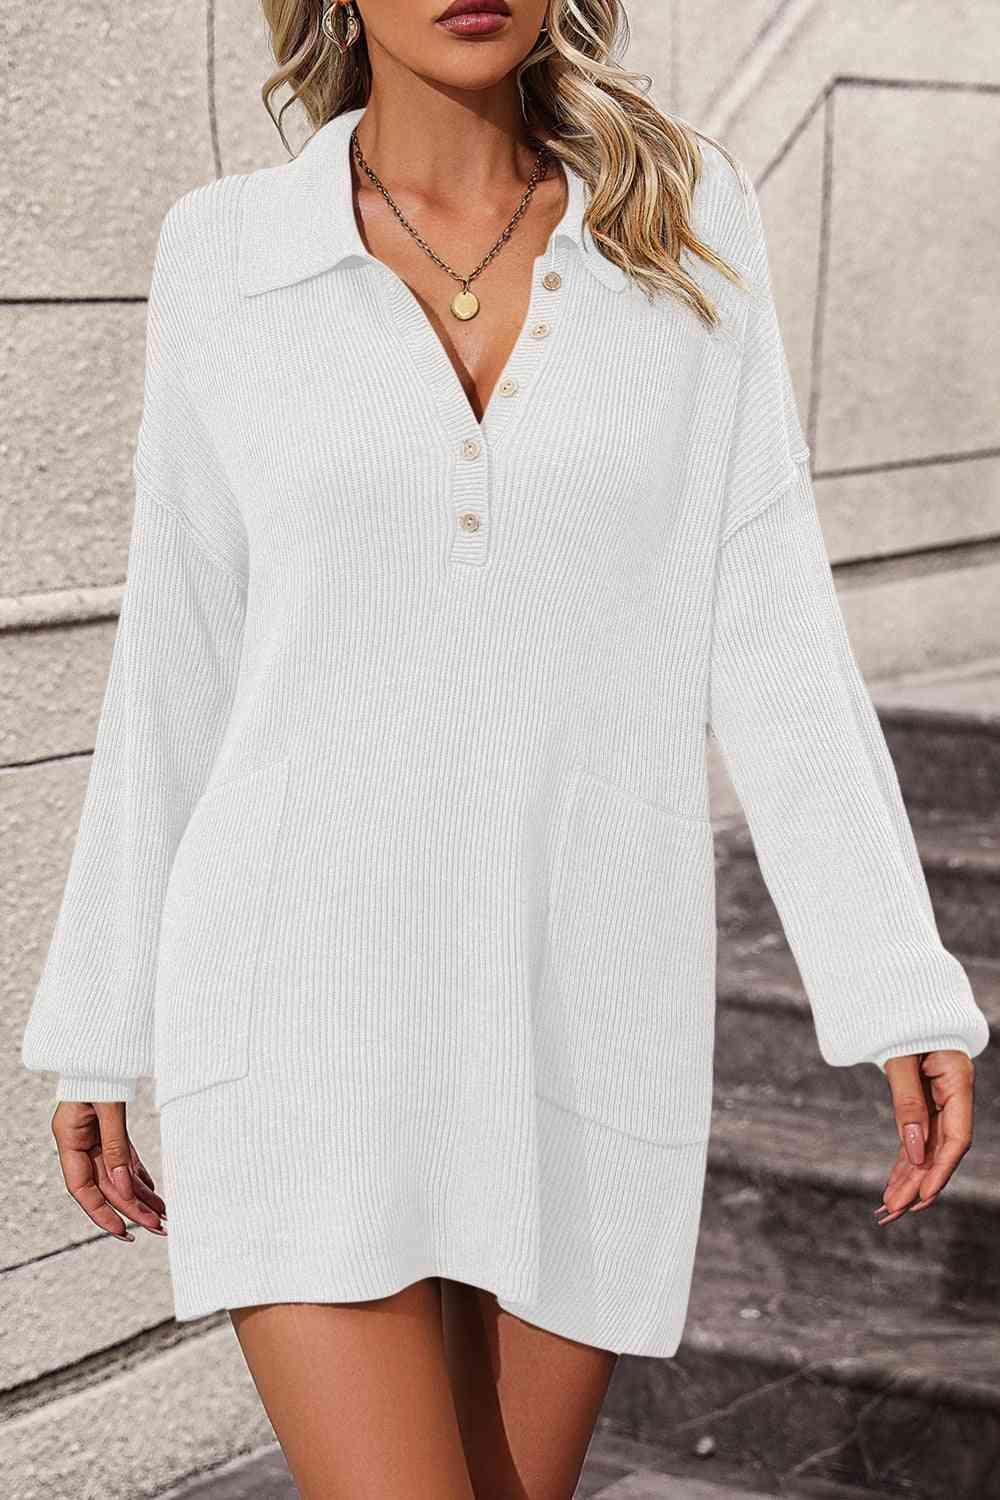 Plain Yet Comfy White Knit Sweater Dress-MXSTUDIO.COM